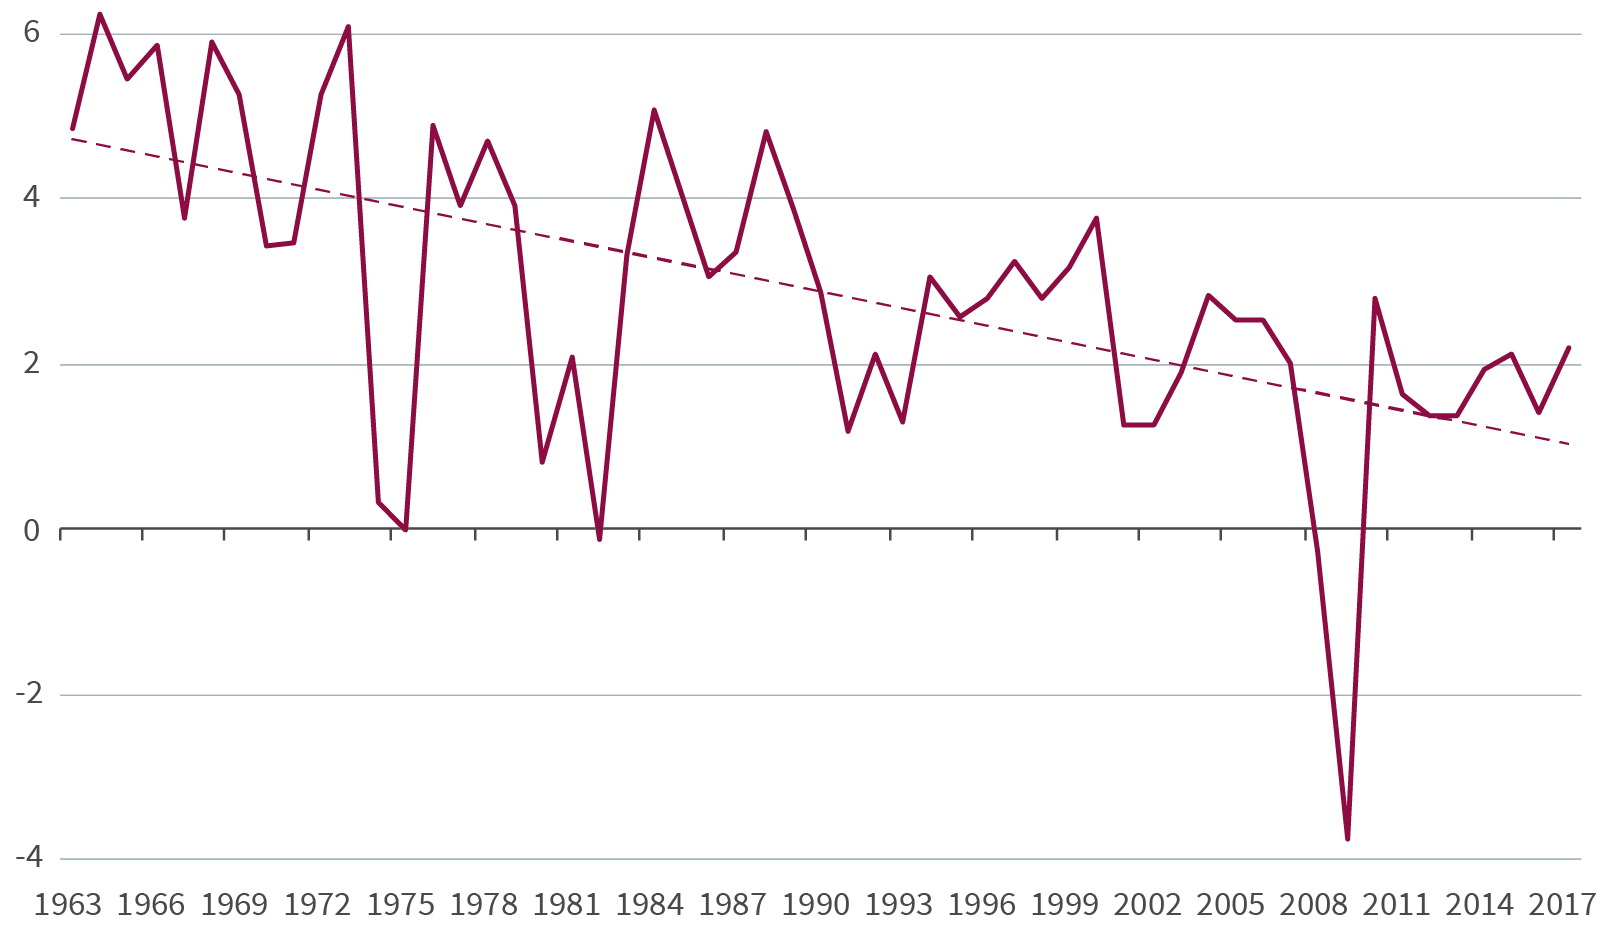 GDP in long-run decline across G7